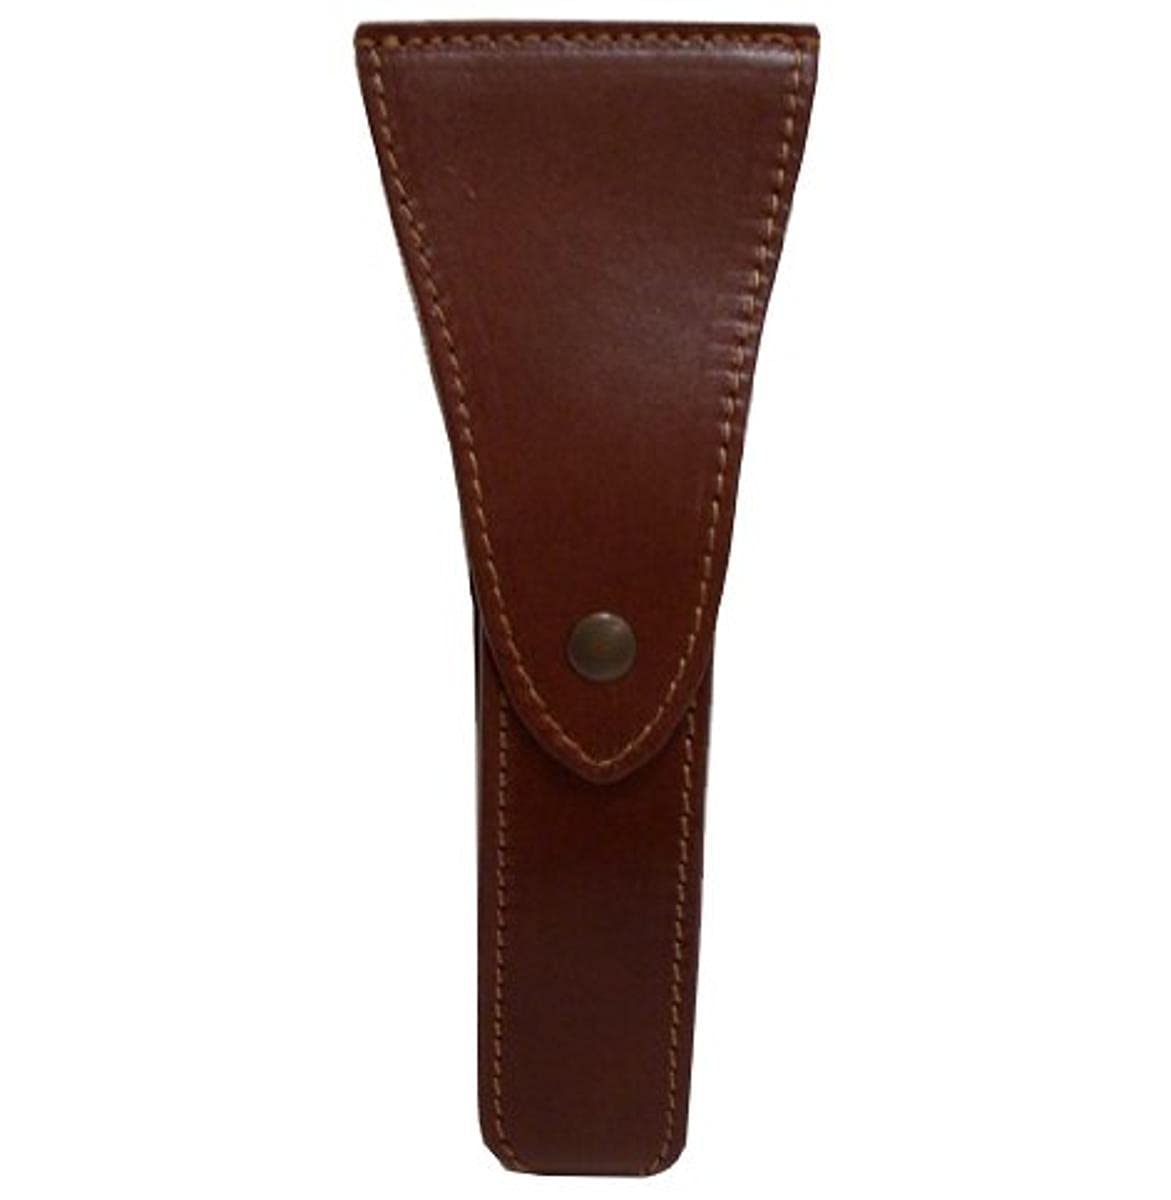 Swissco Leather Case for Razor, Brown, 0.5 Pound